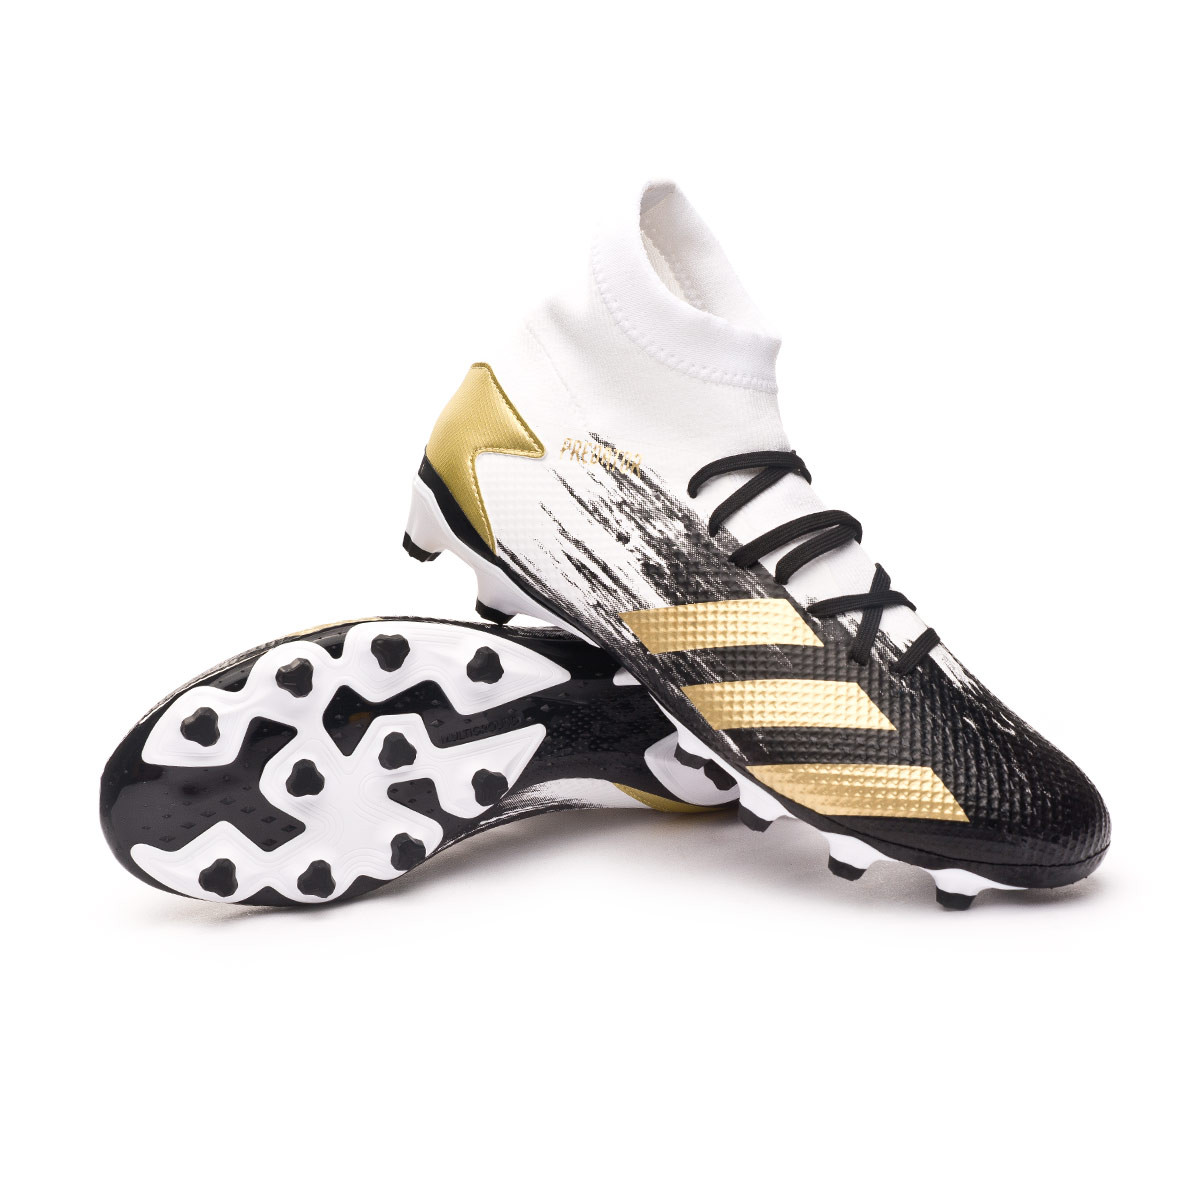 Football Boots adidas Predator 20.3 MG 